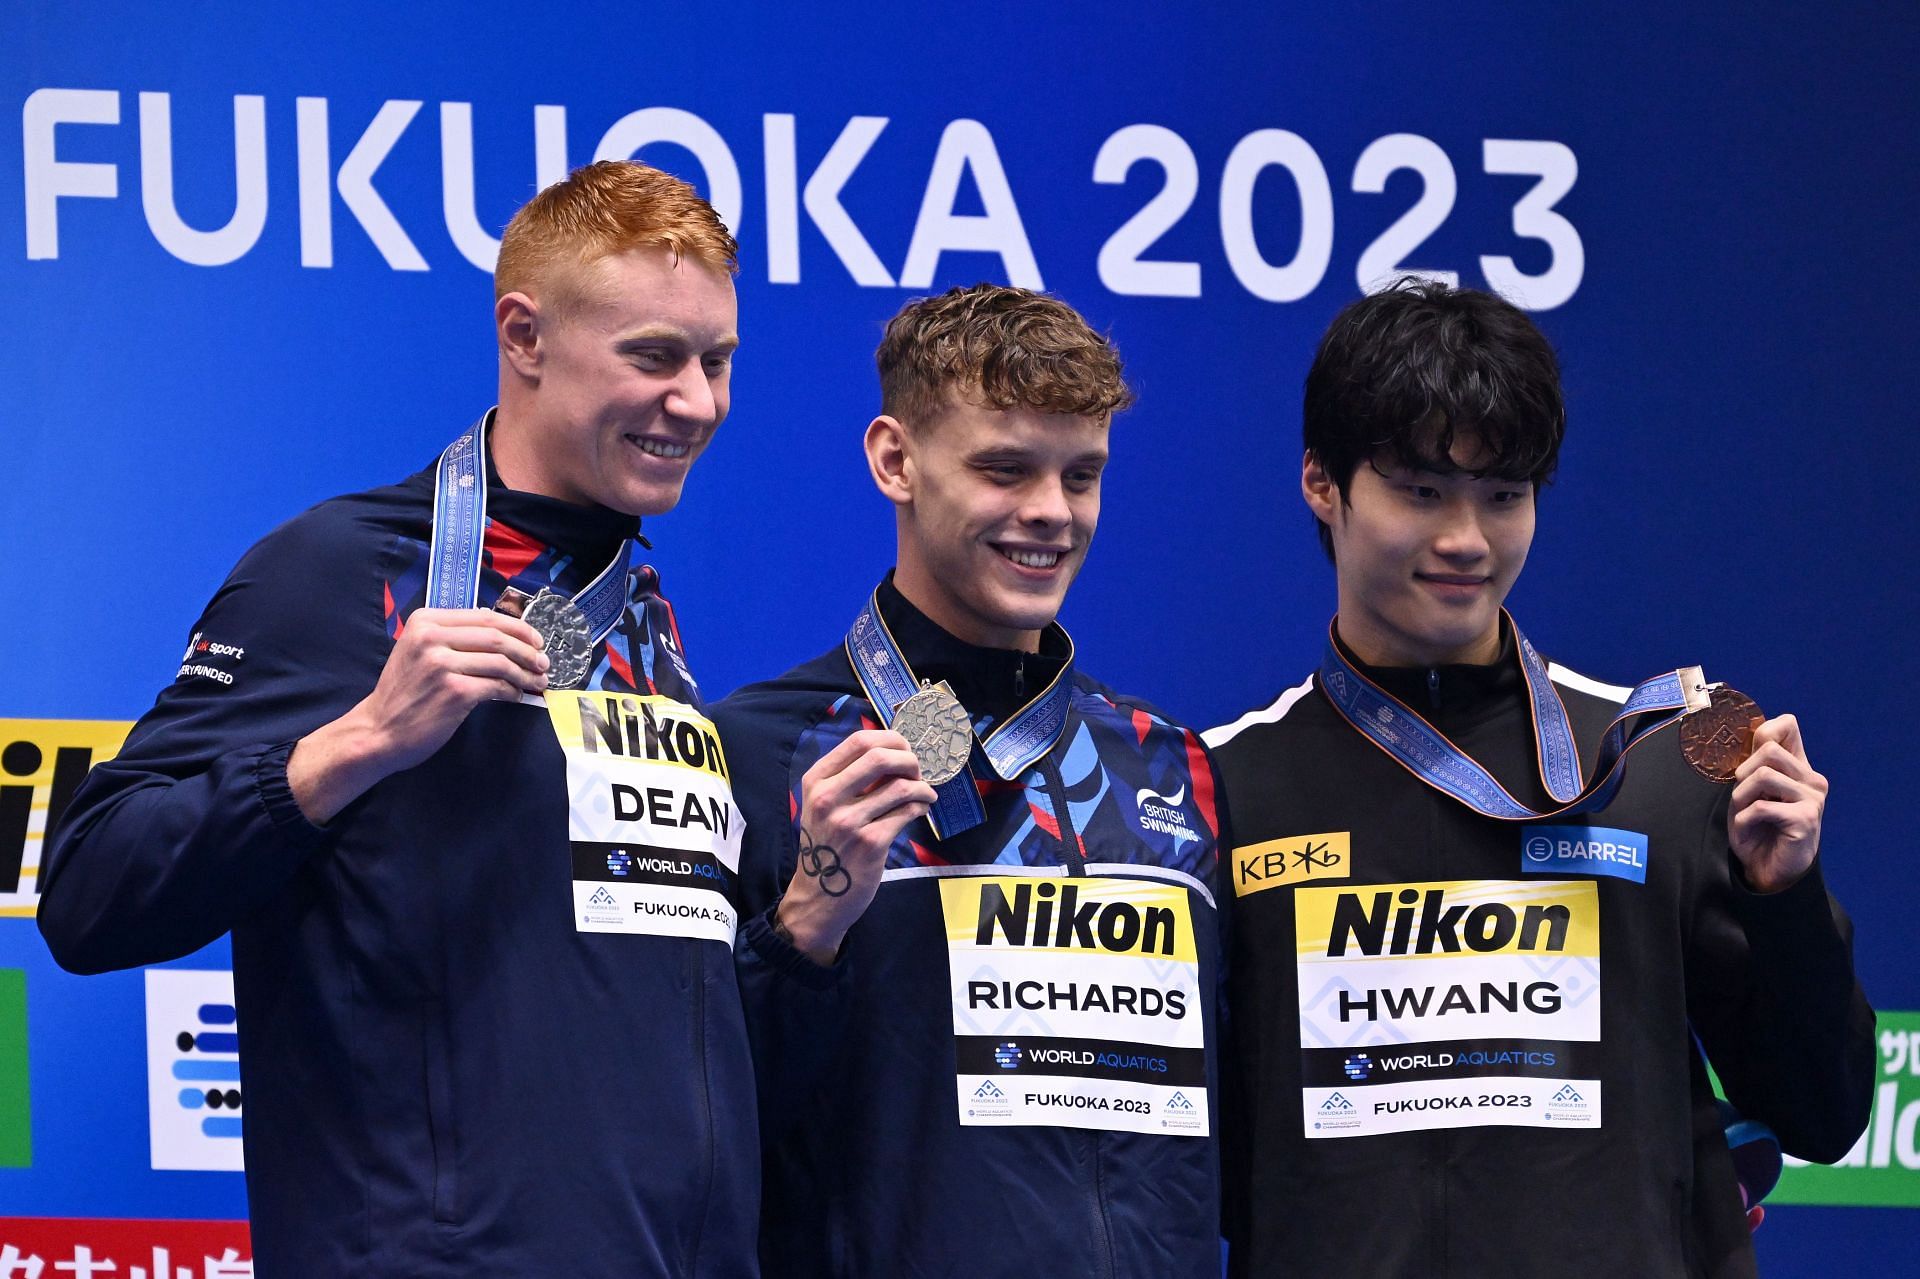 Fukuoka 2023 World Aquatics Championships: Swimming - Day 3